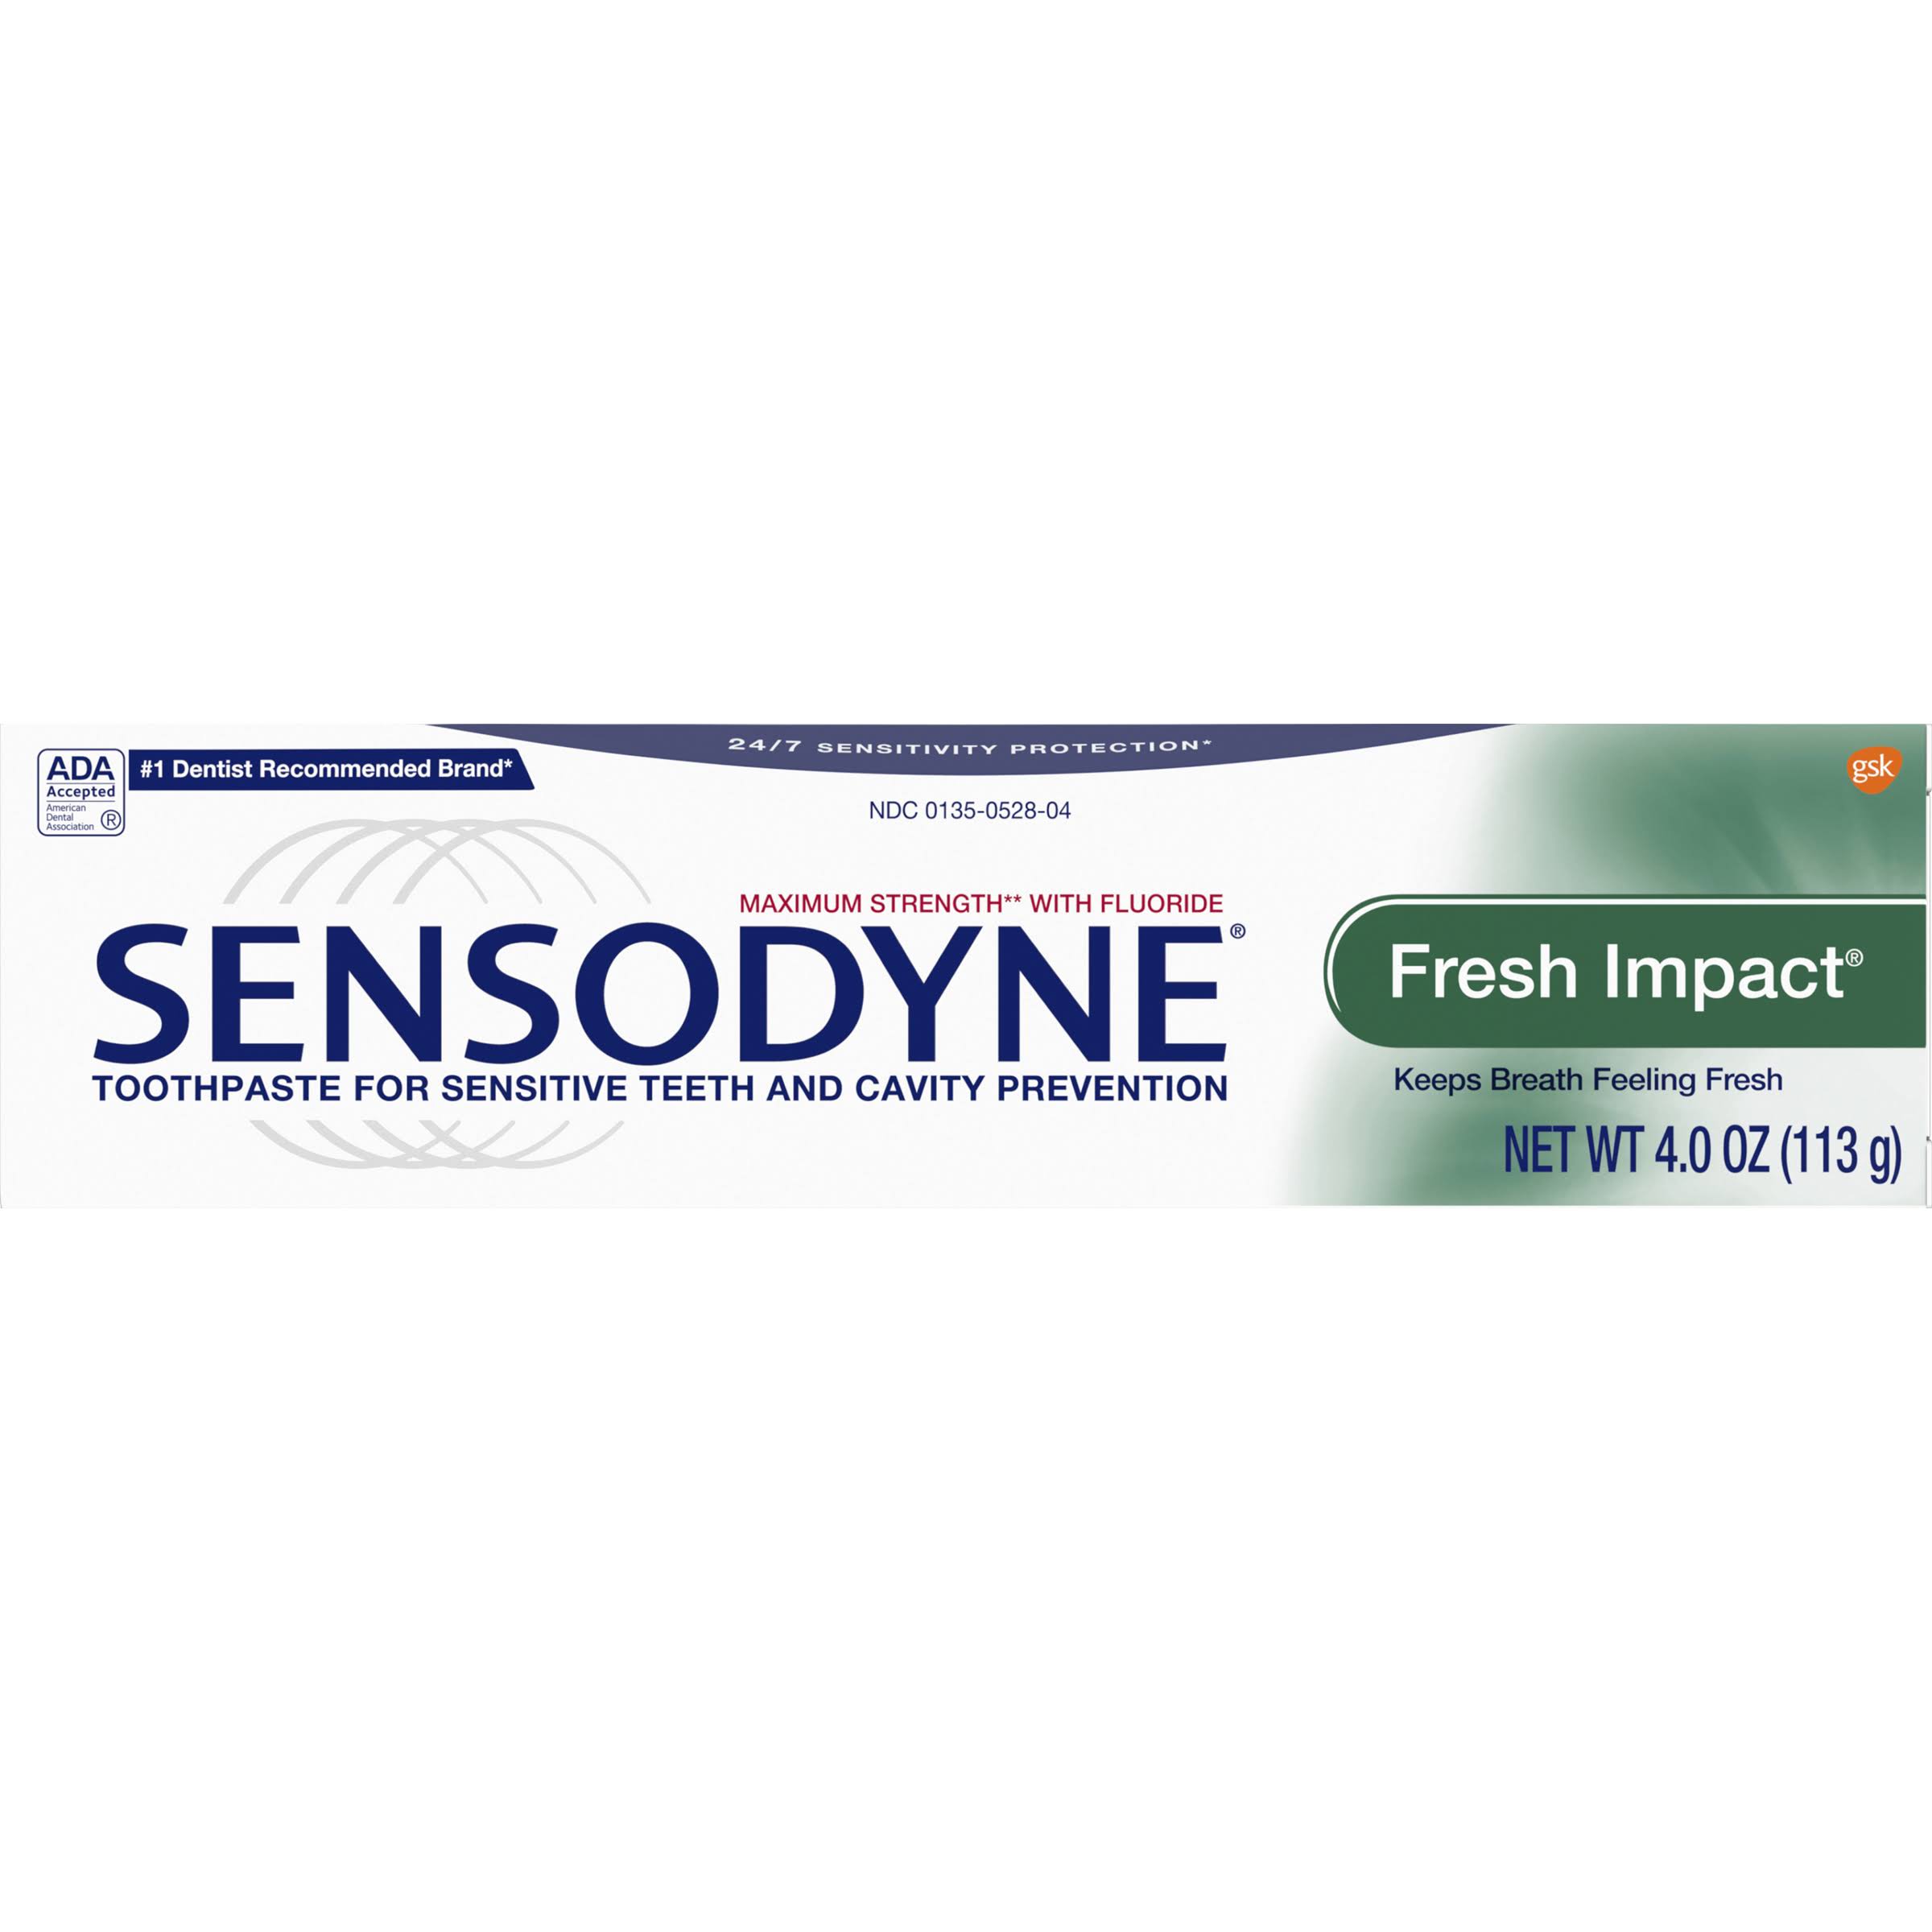 Sensodyne Fresh Impact Toothpaste for Sensitive Teeth and Cavity Protection - 4oz